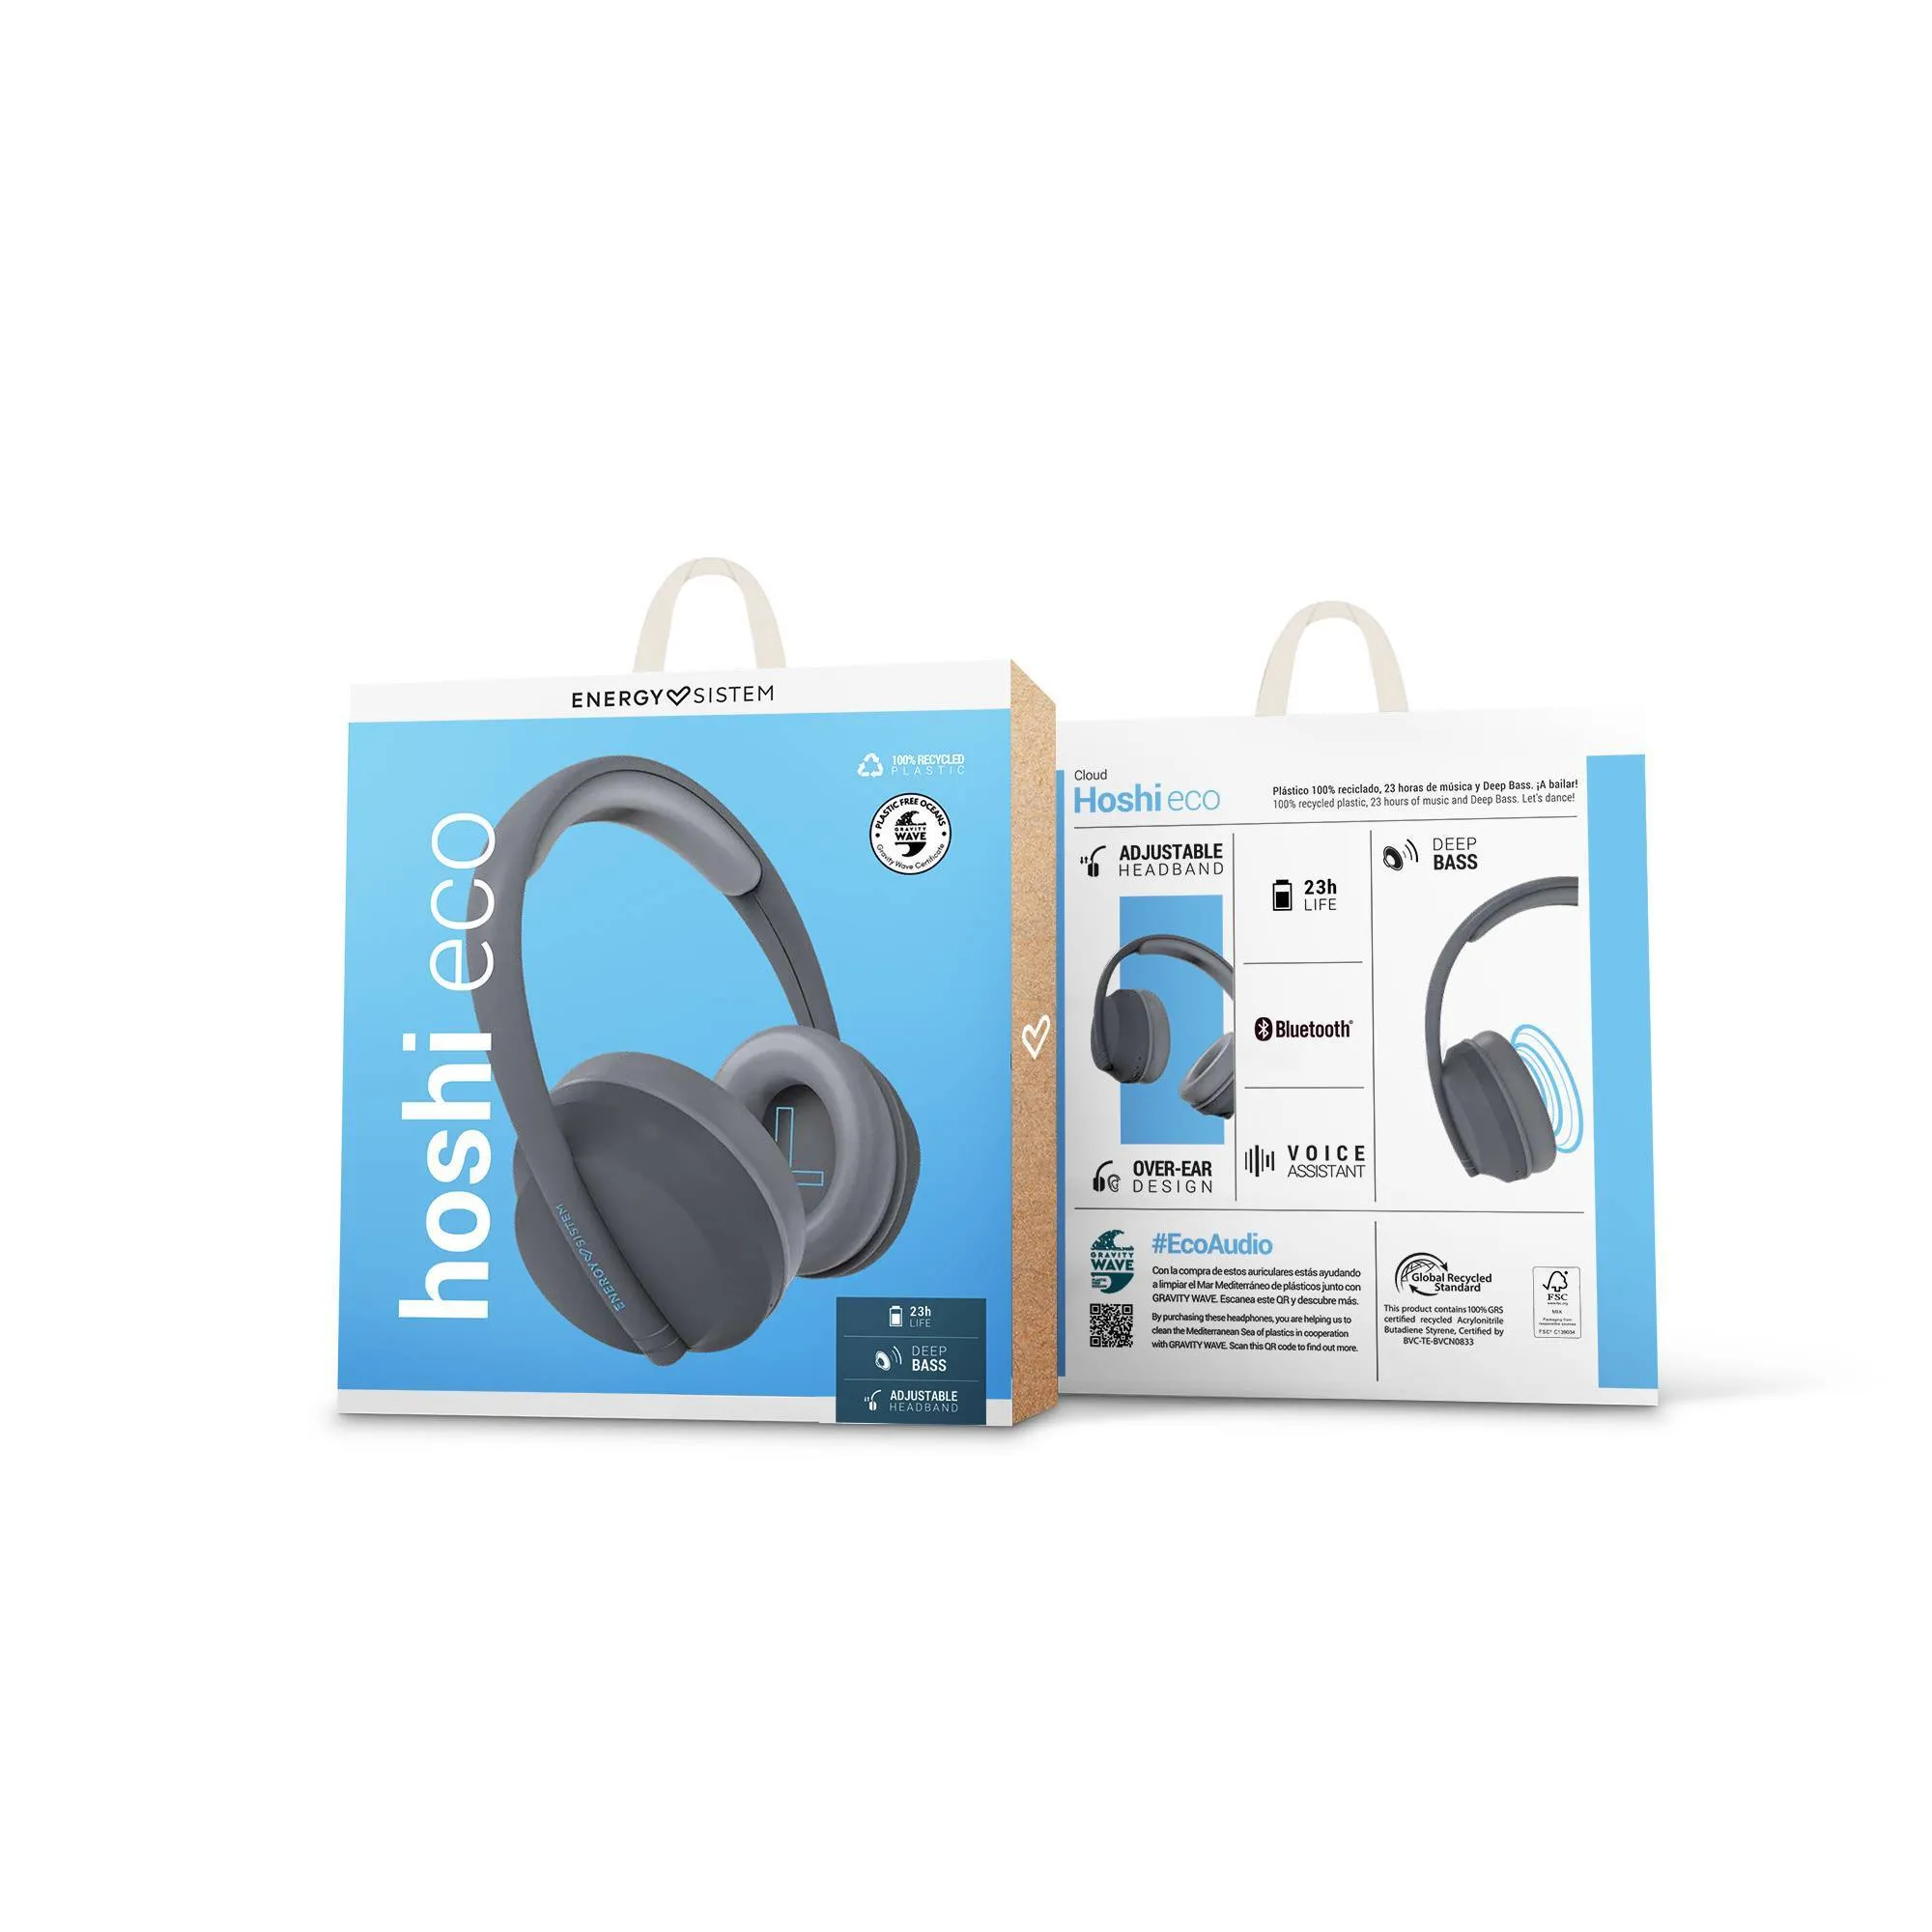 Hoshi ECO Bluetooth cloud headphones' packaging